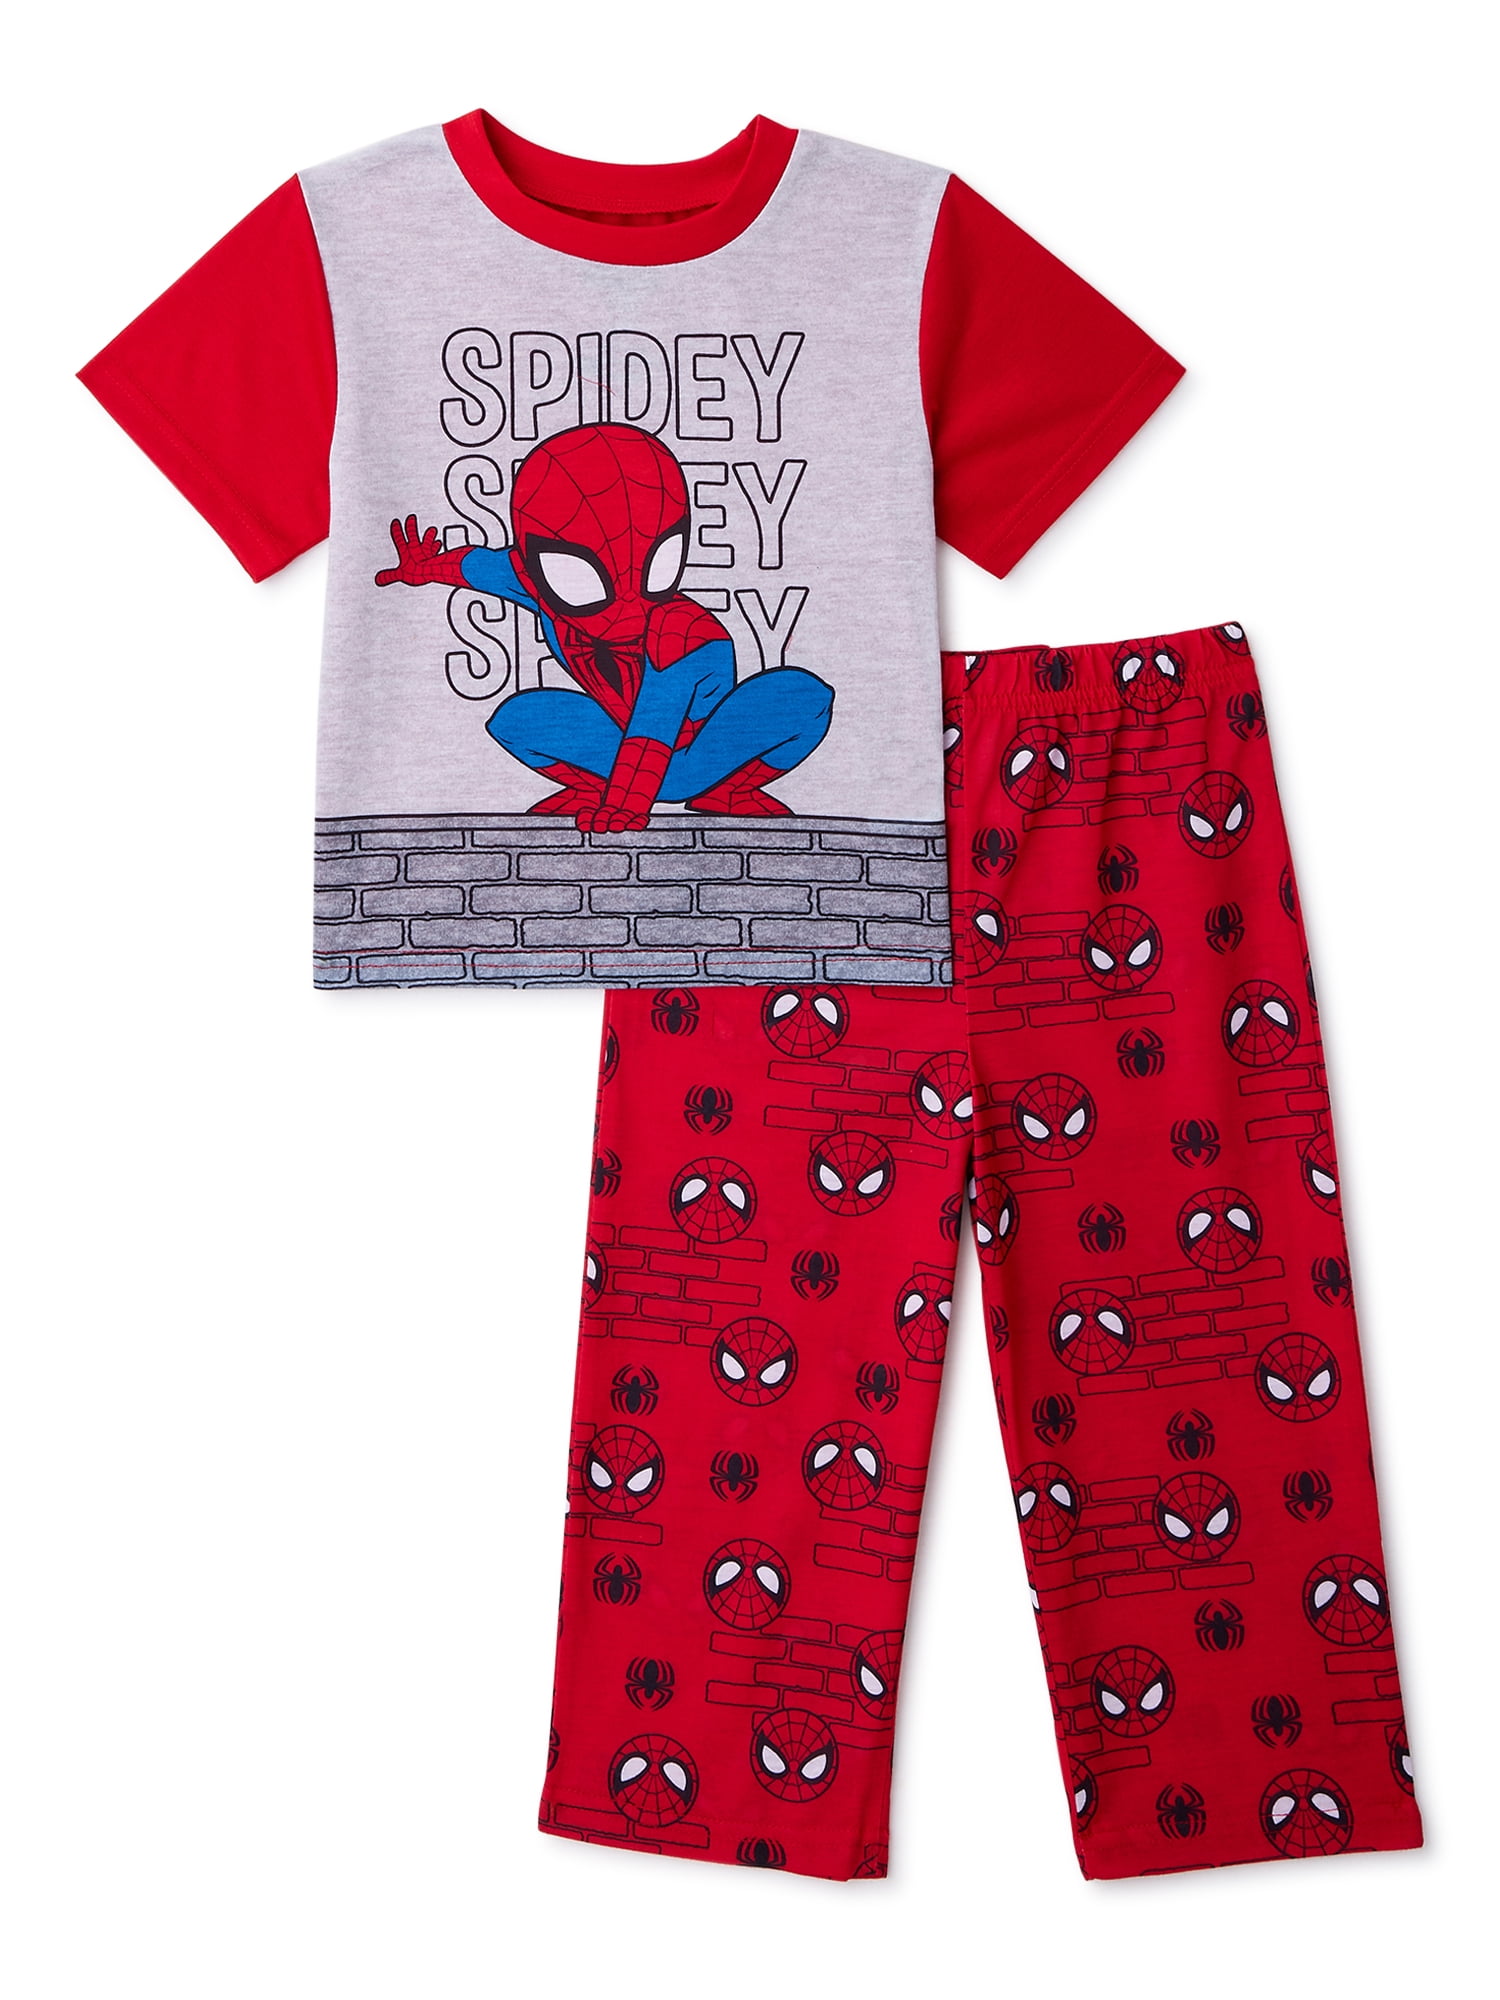 Boys Marvel Super Hero Adventures 2 pc Sleepwear Set pajamas 2T 4T or 5T